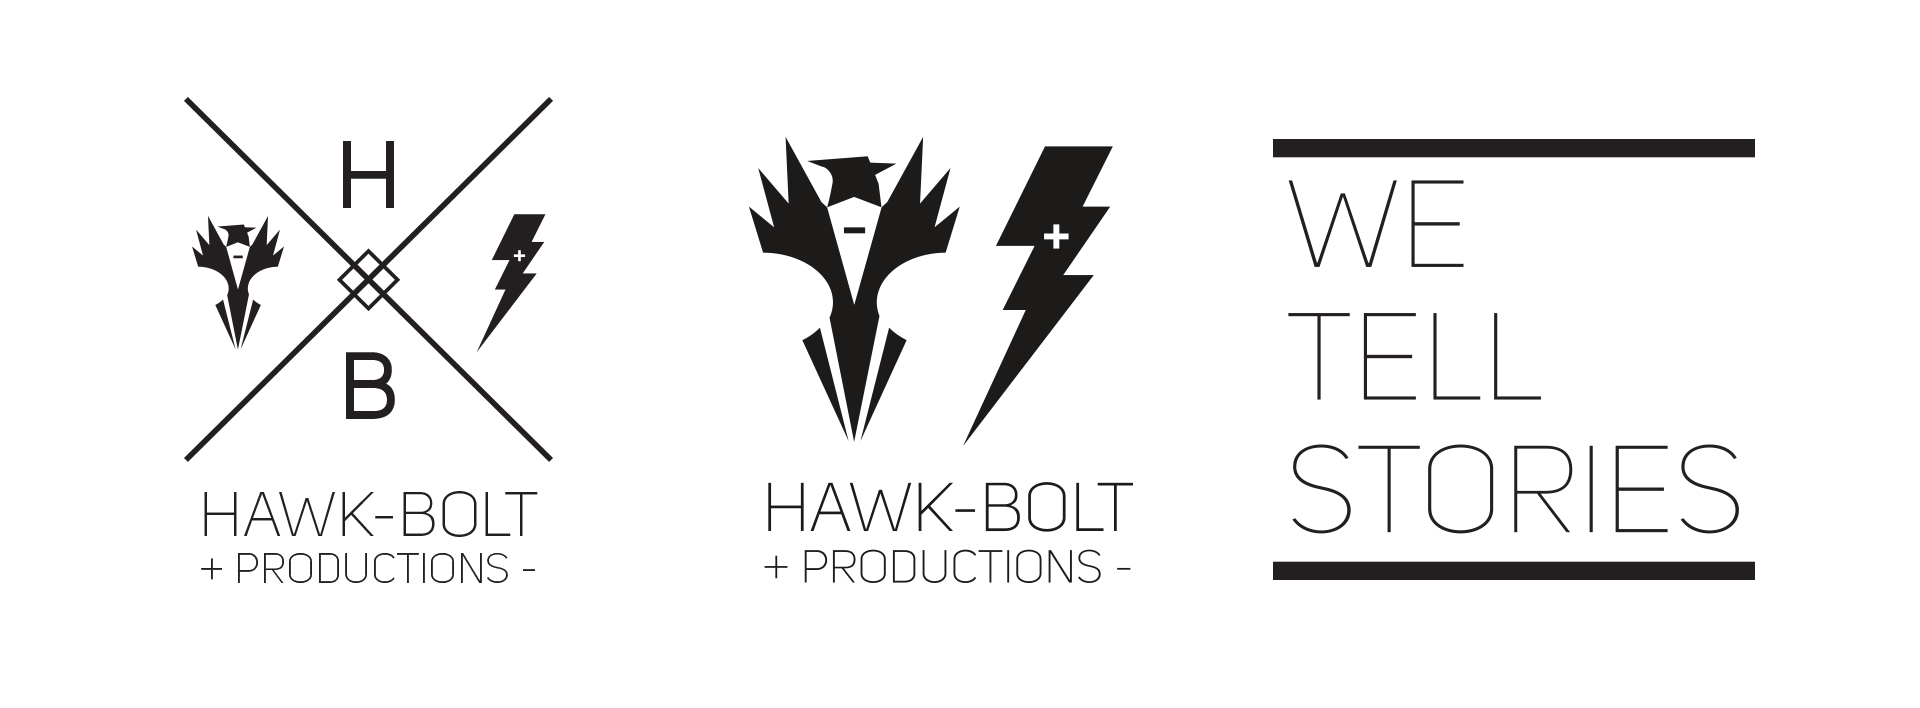 HawkBolt video production logo design mockup